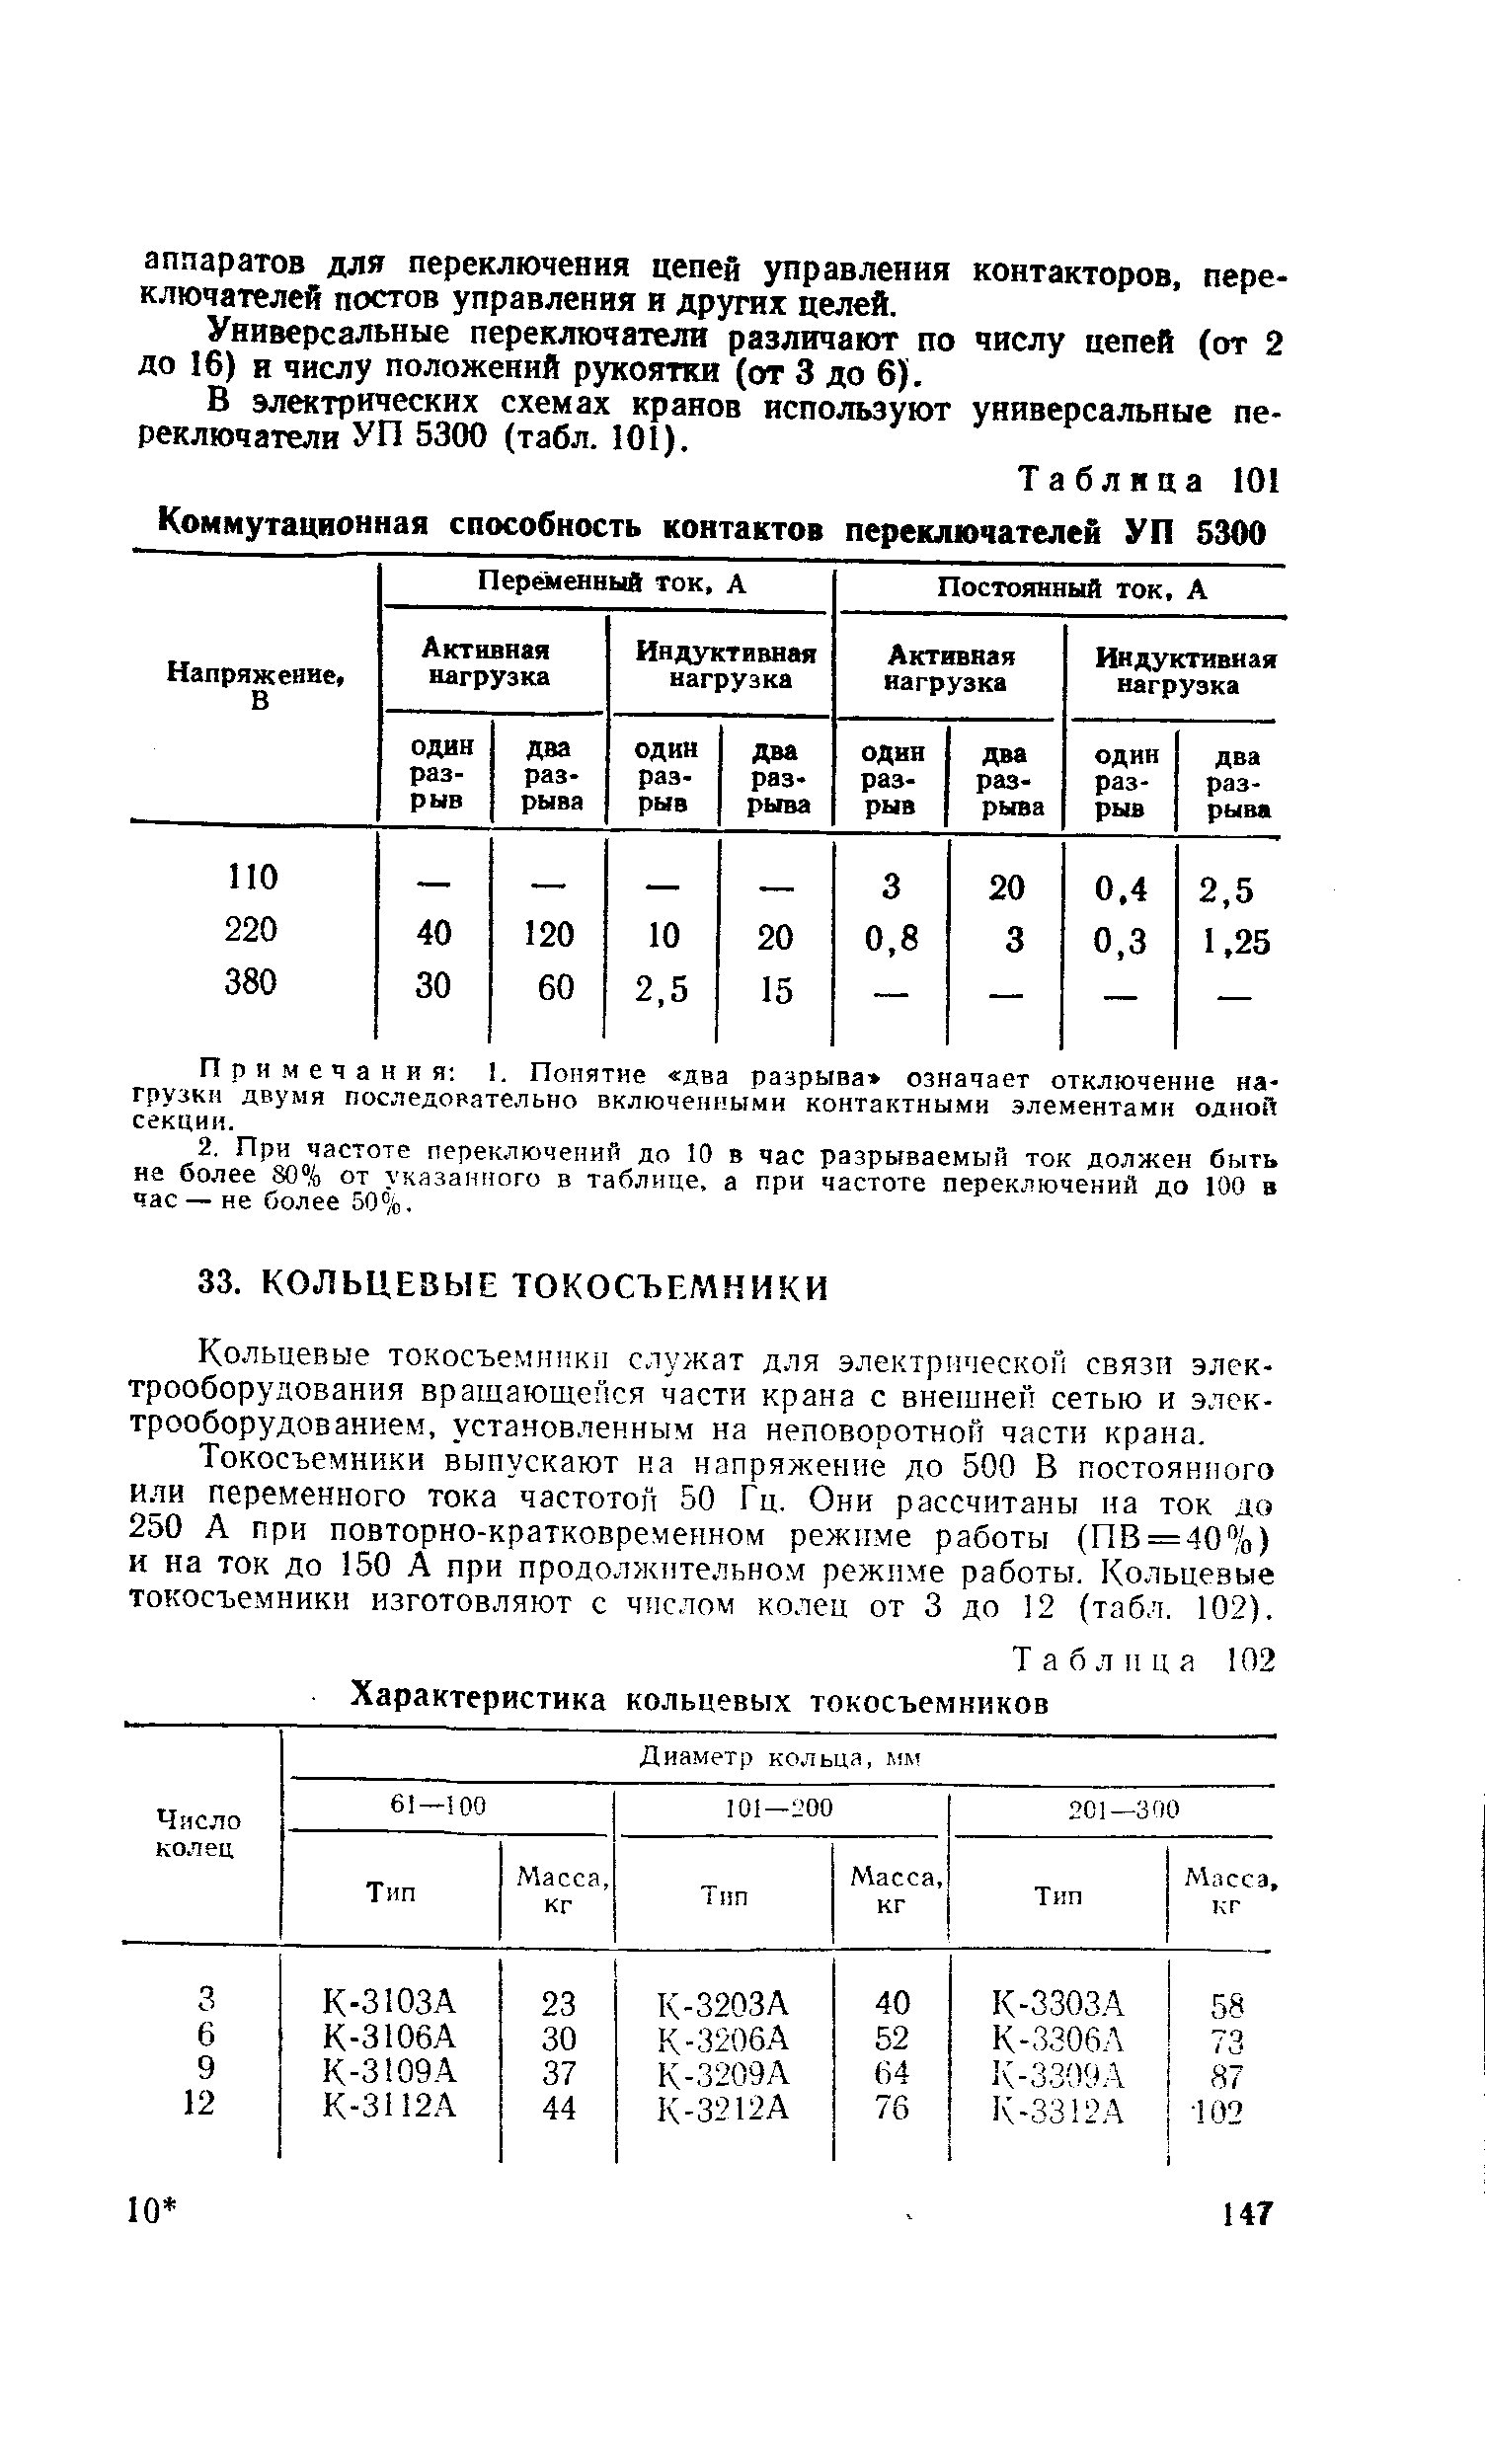 Таблица 102 Характеристика кольцевых токосъемников
